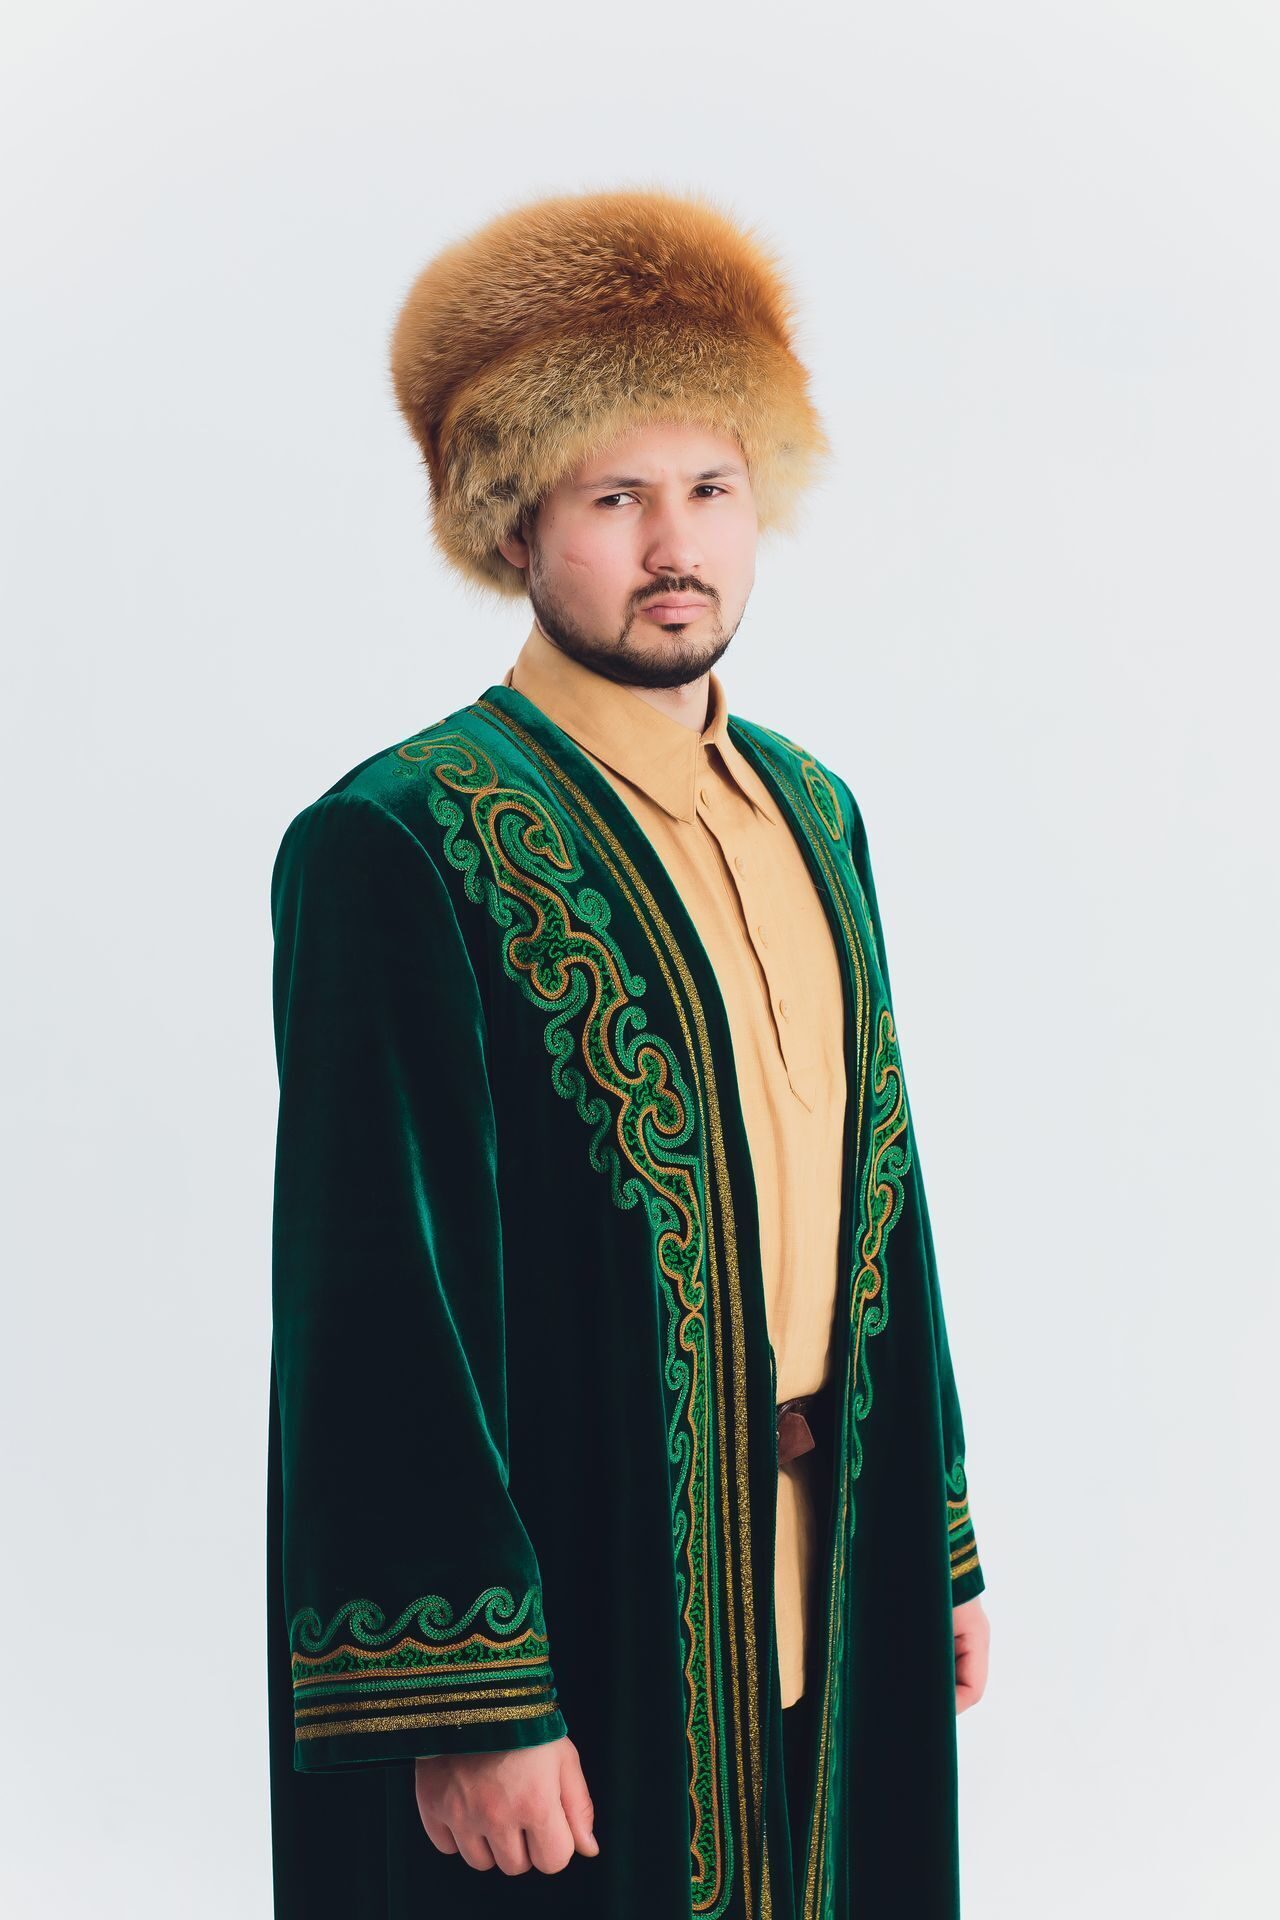 Татарская одежда картинки (50 фото)